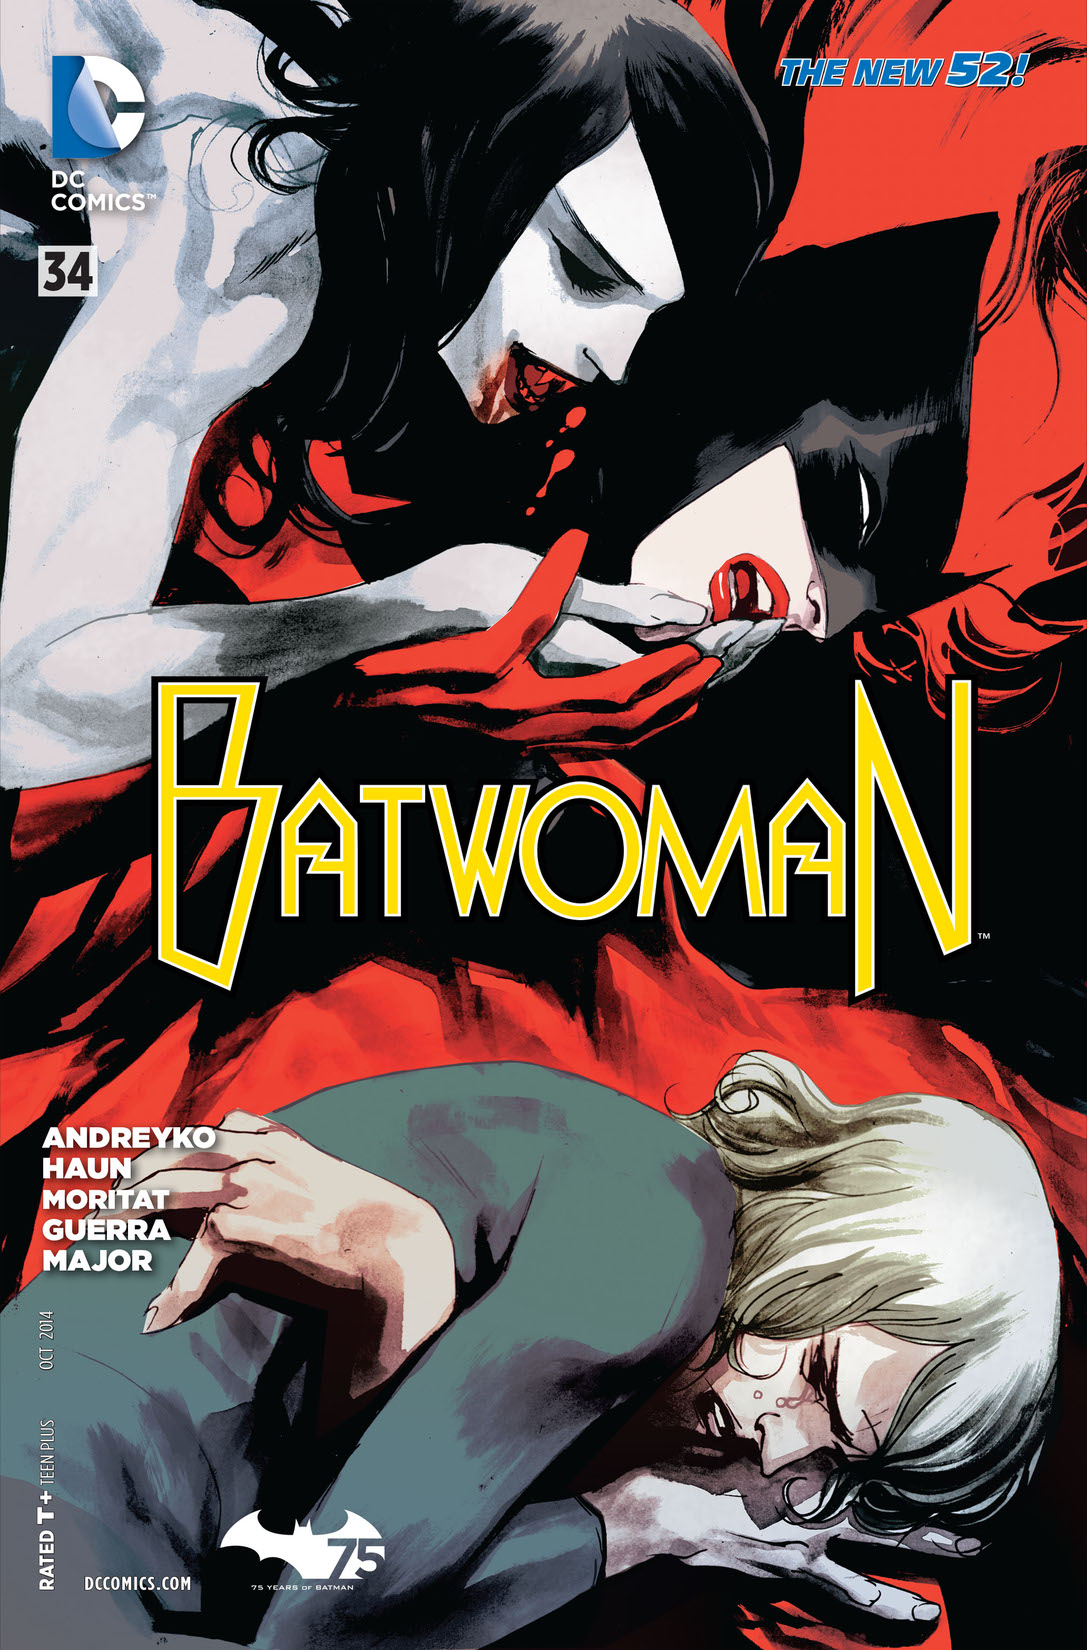 Batwoman (2011-) #34 preview images